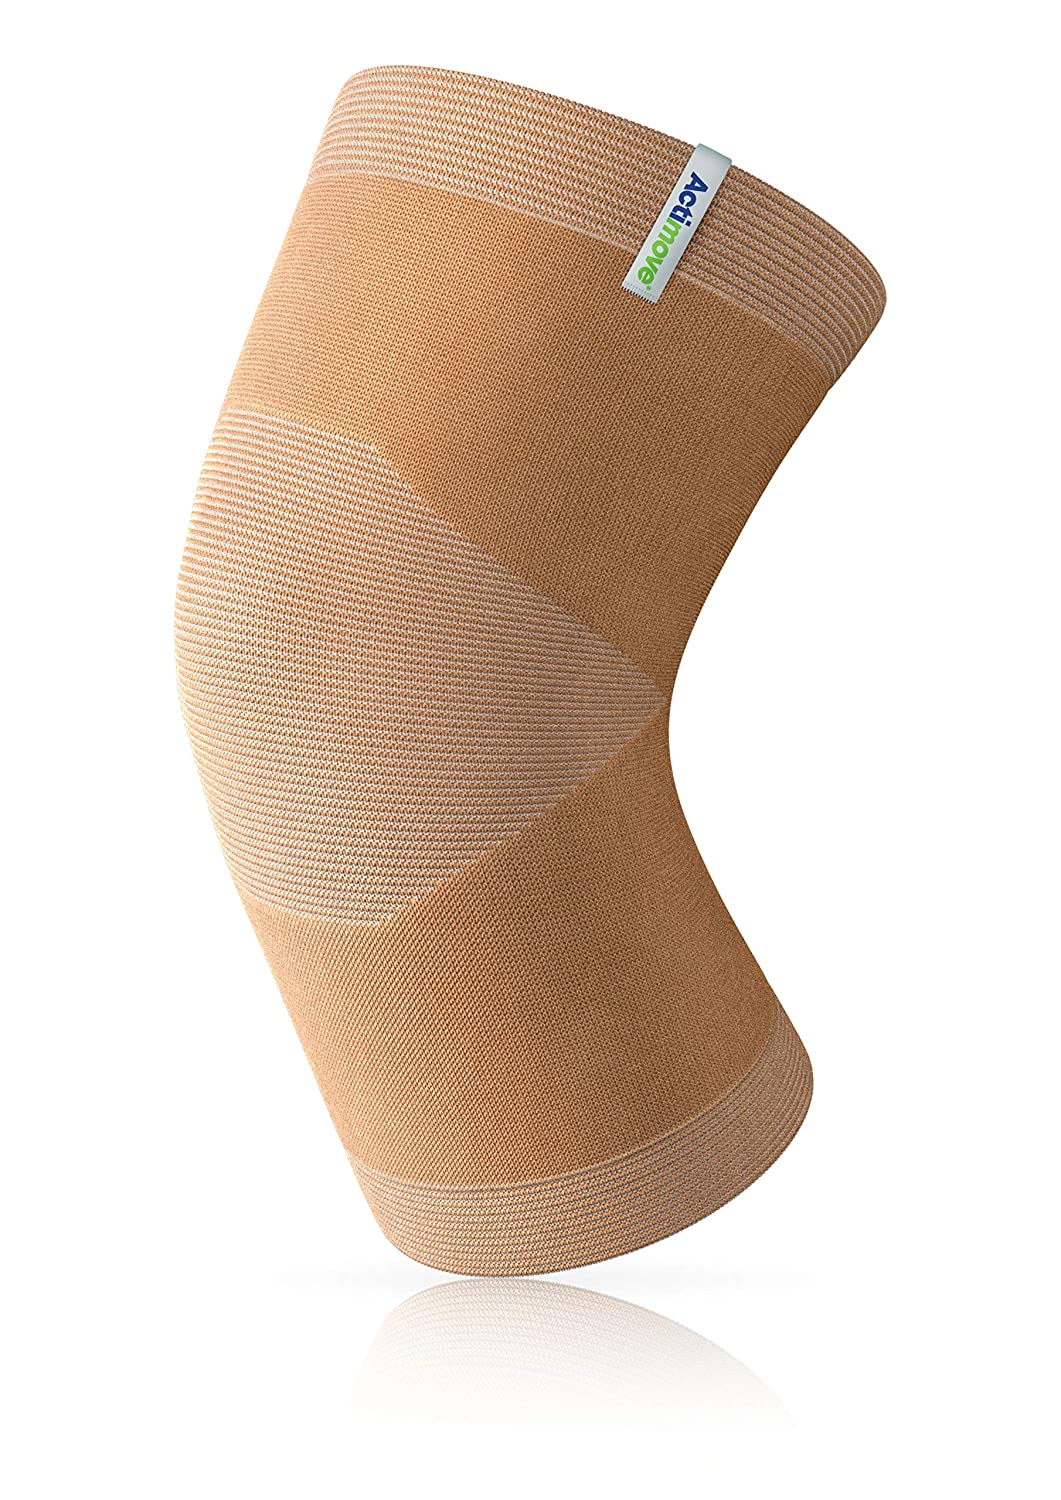 Actimove Arthritis Pain Relief Support, Knee, Lg, Beige - Ea/1 - Home Health Store Inc